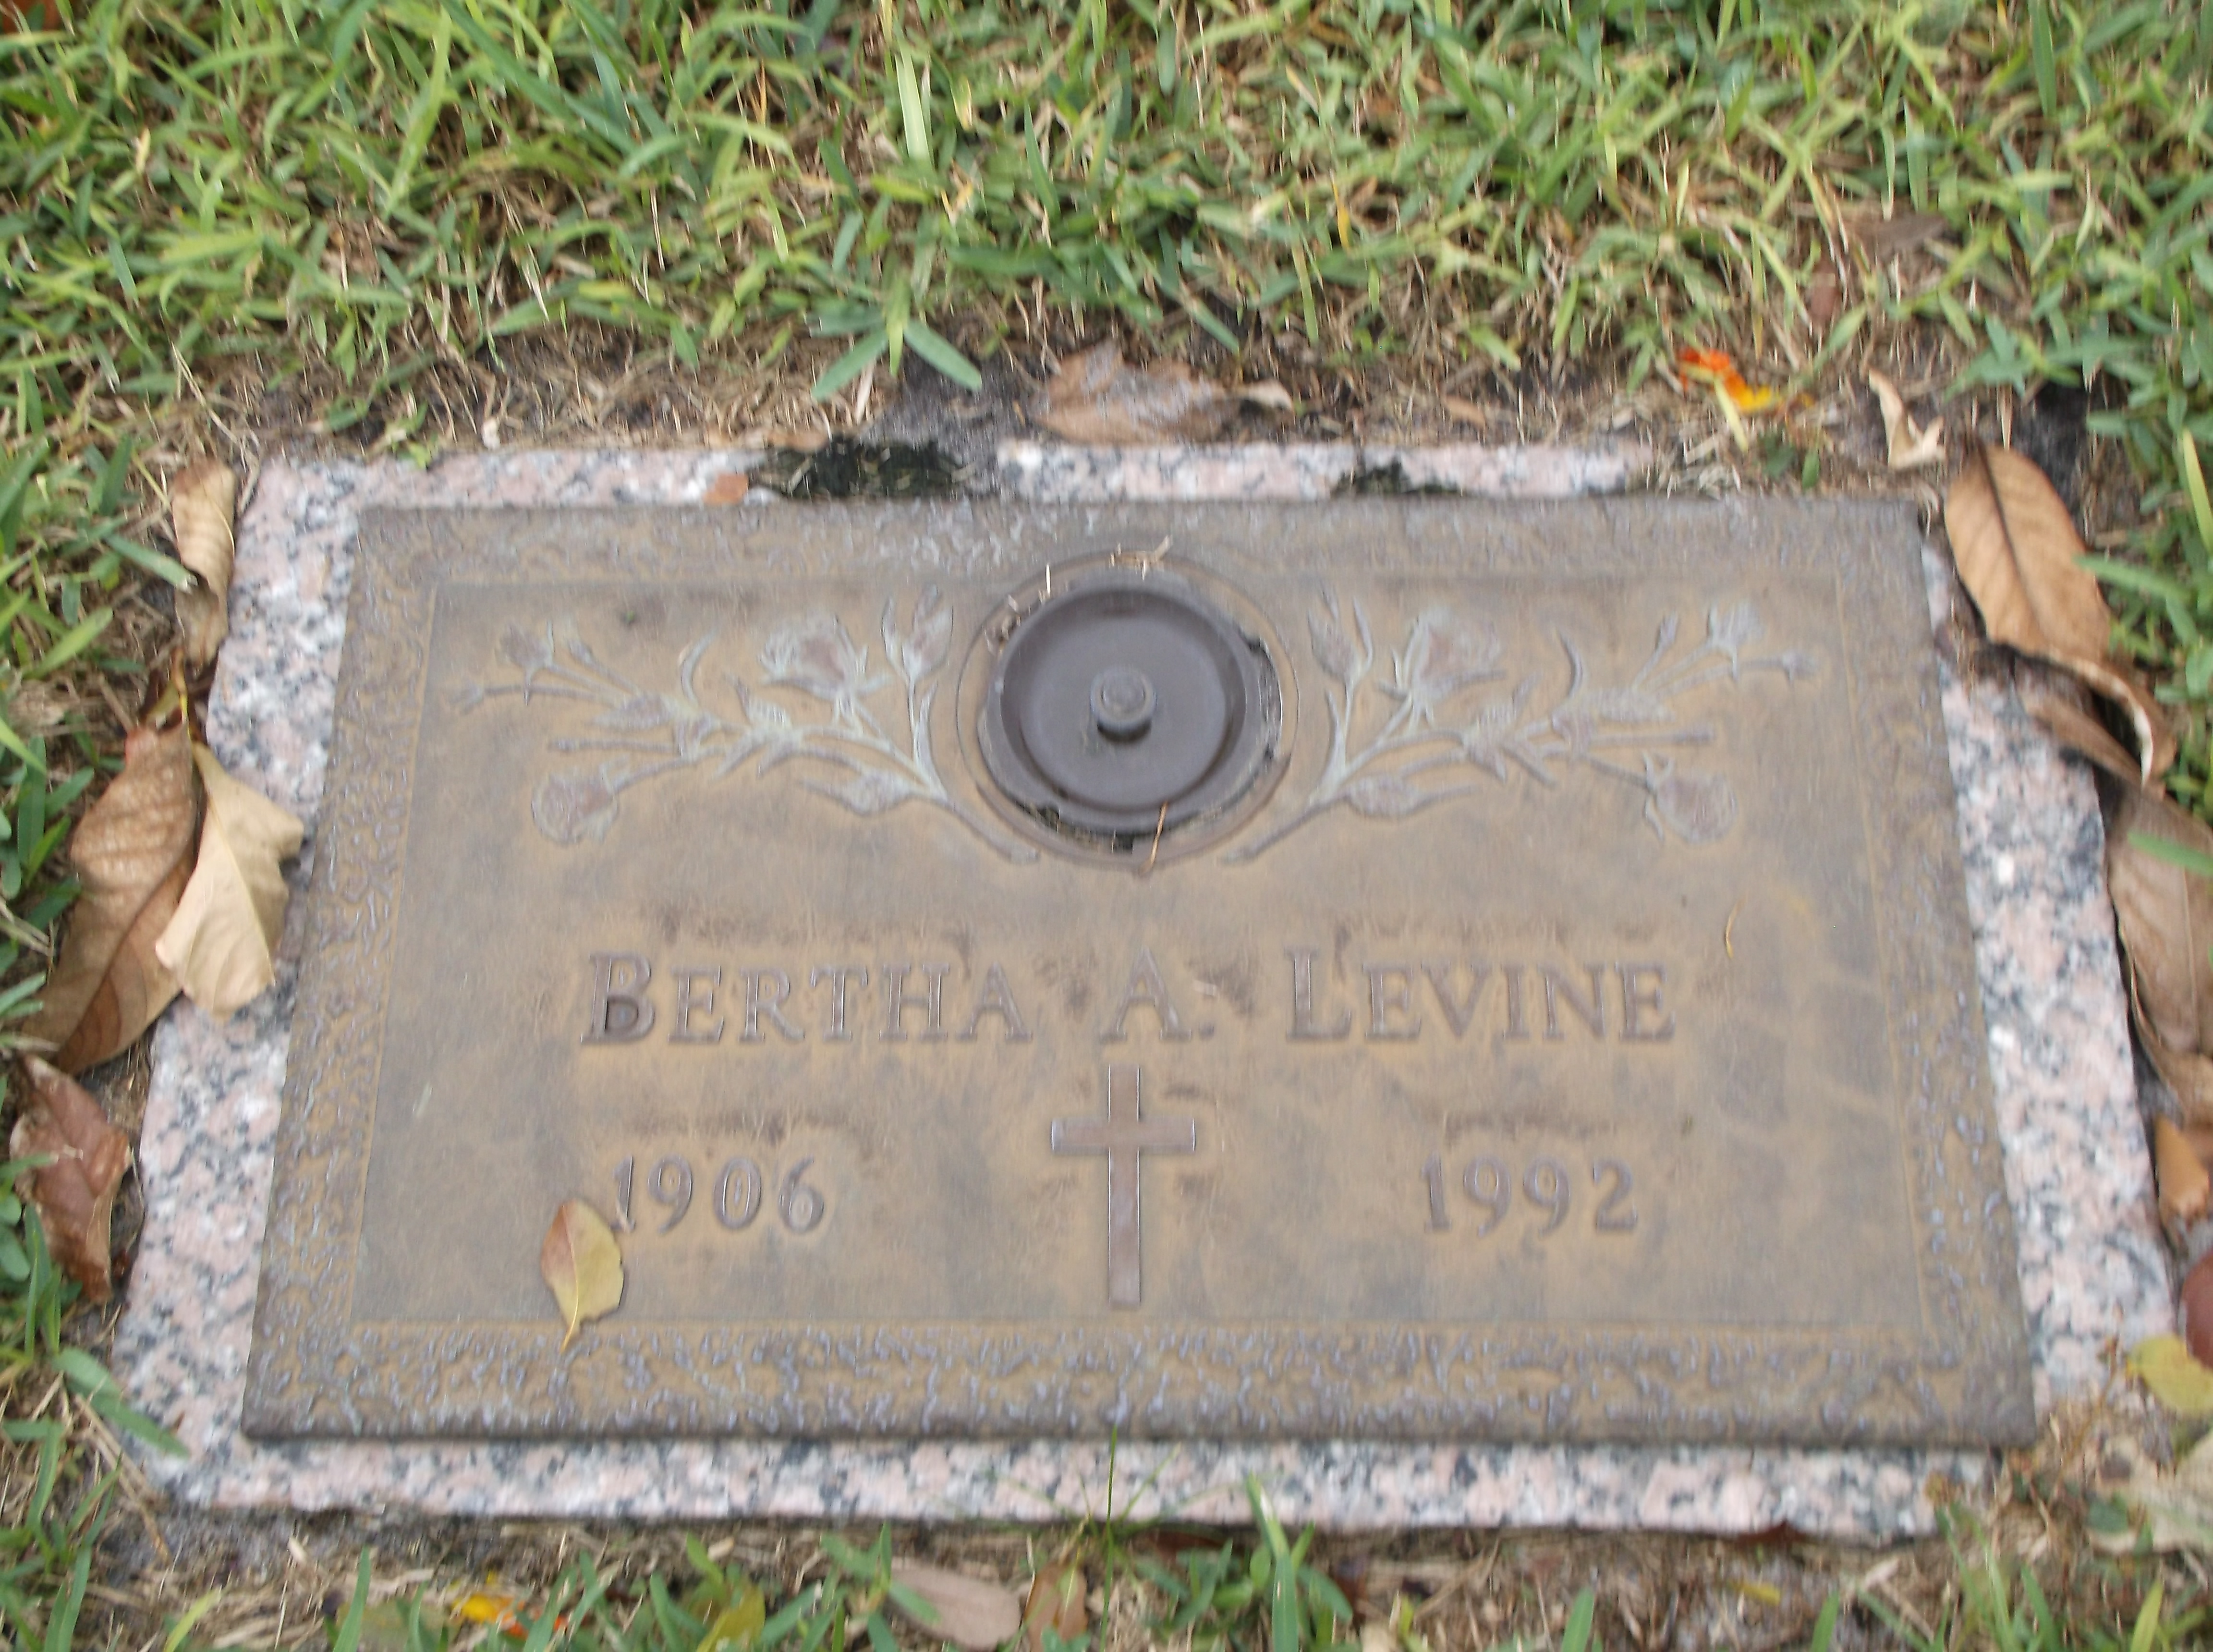 Bertha A Levine